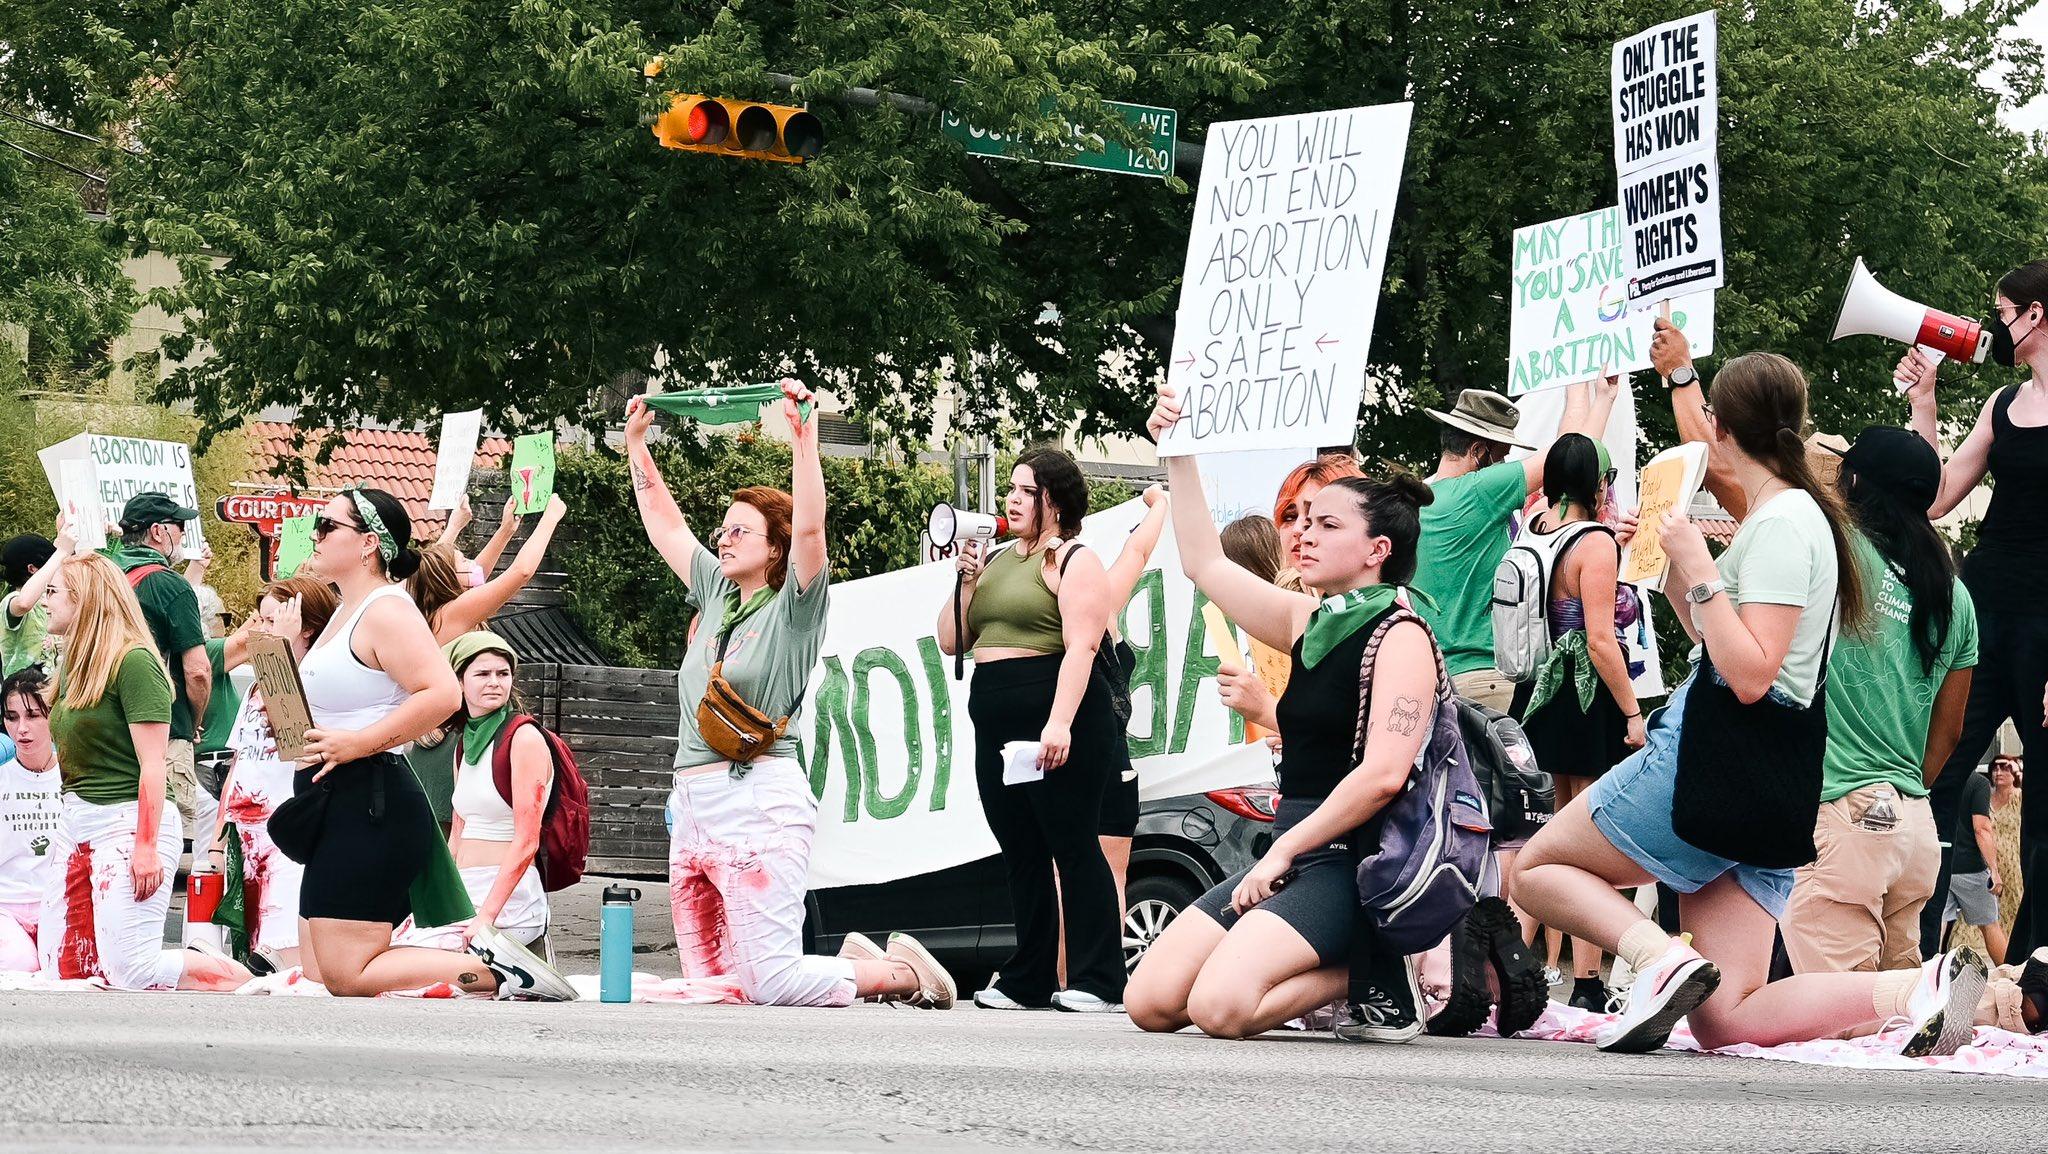 Austin Texas blocking intersections demanding legal abortion nationwide